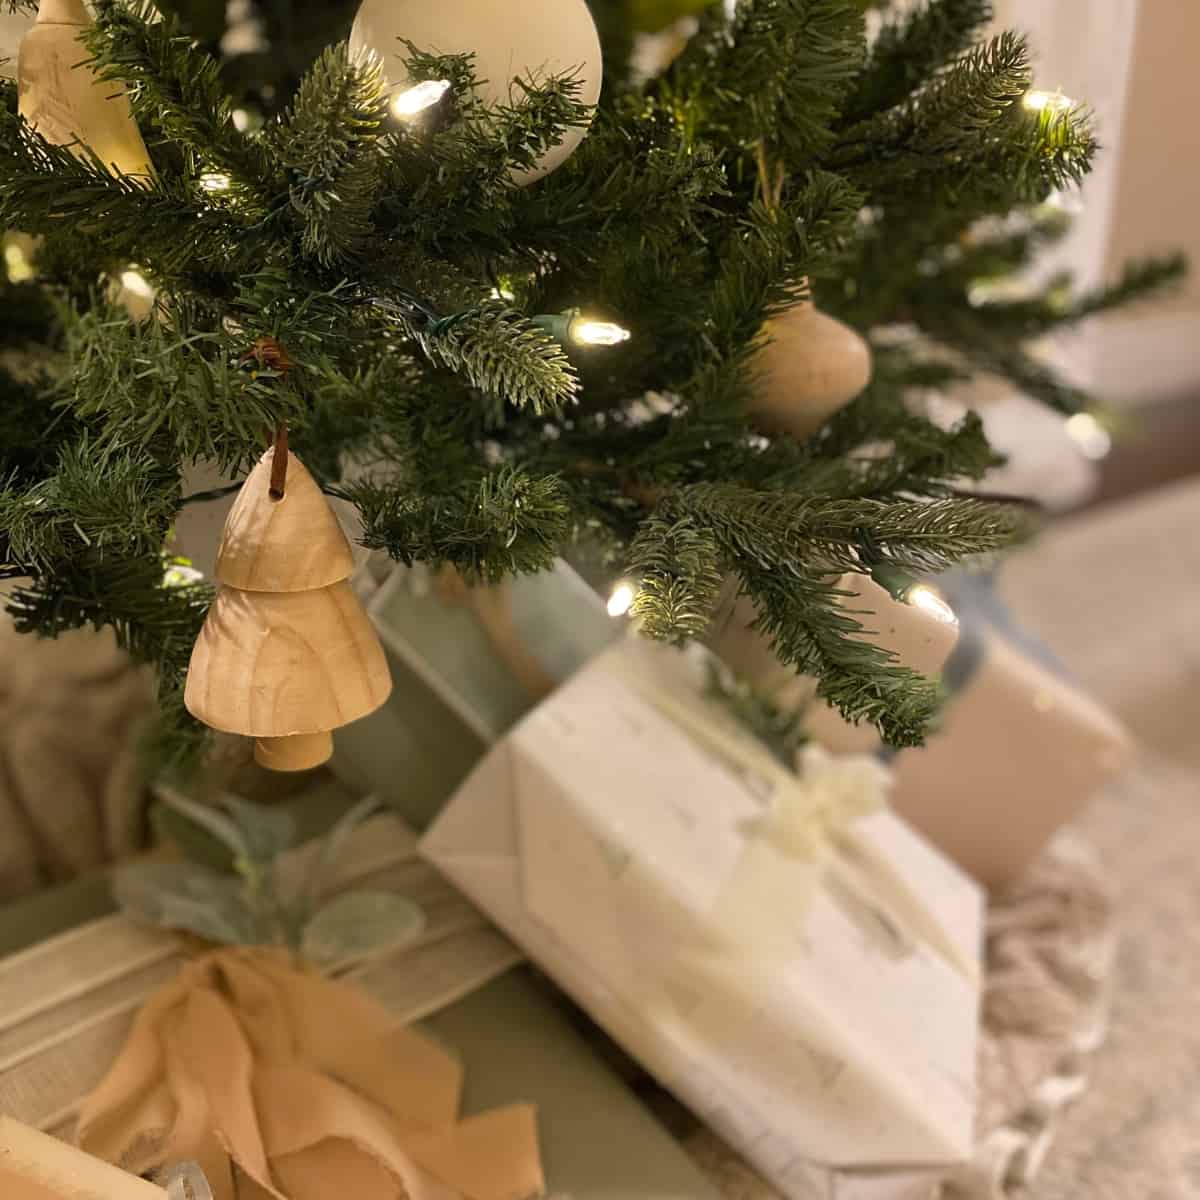 Wood tree Christmas ornaments on a tree